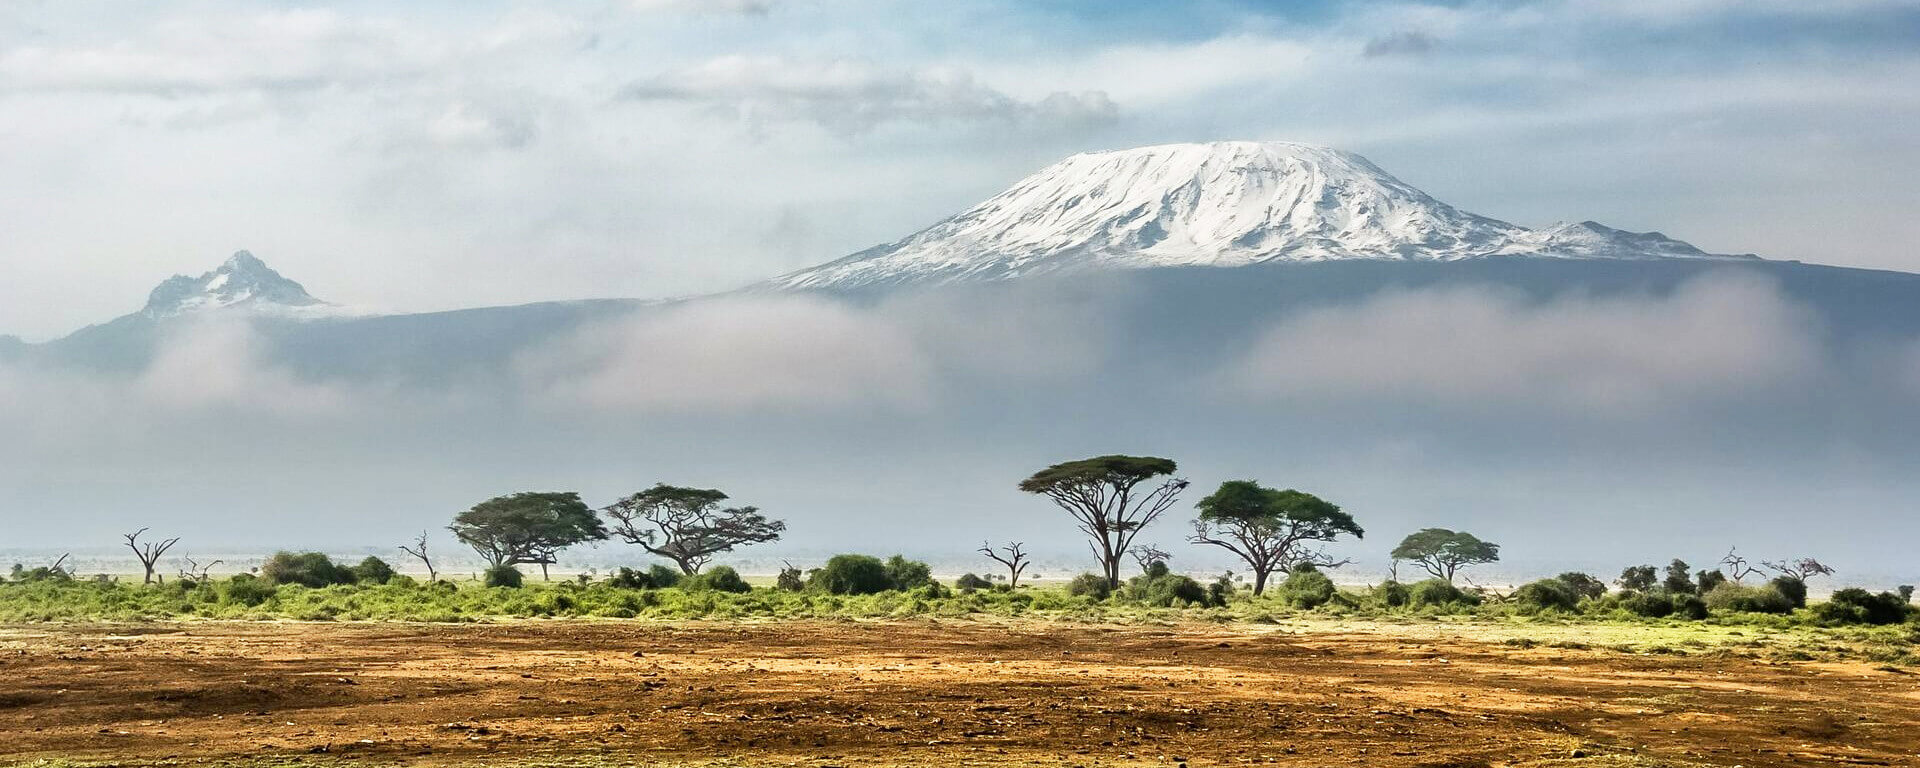 Kilimanjaro Tour Packages